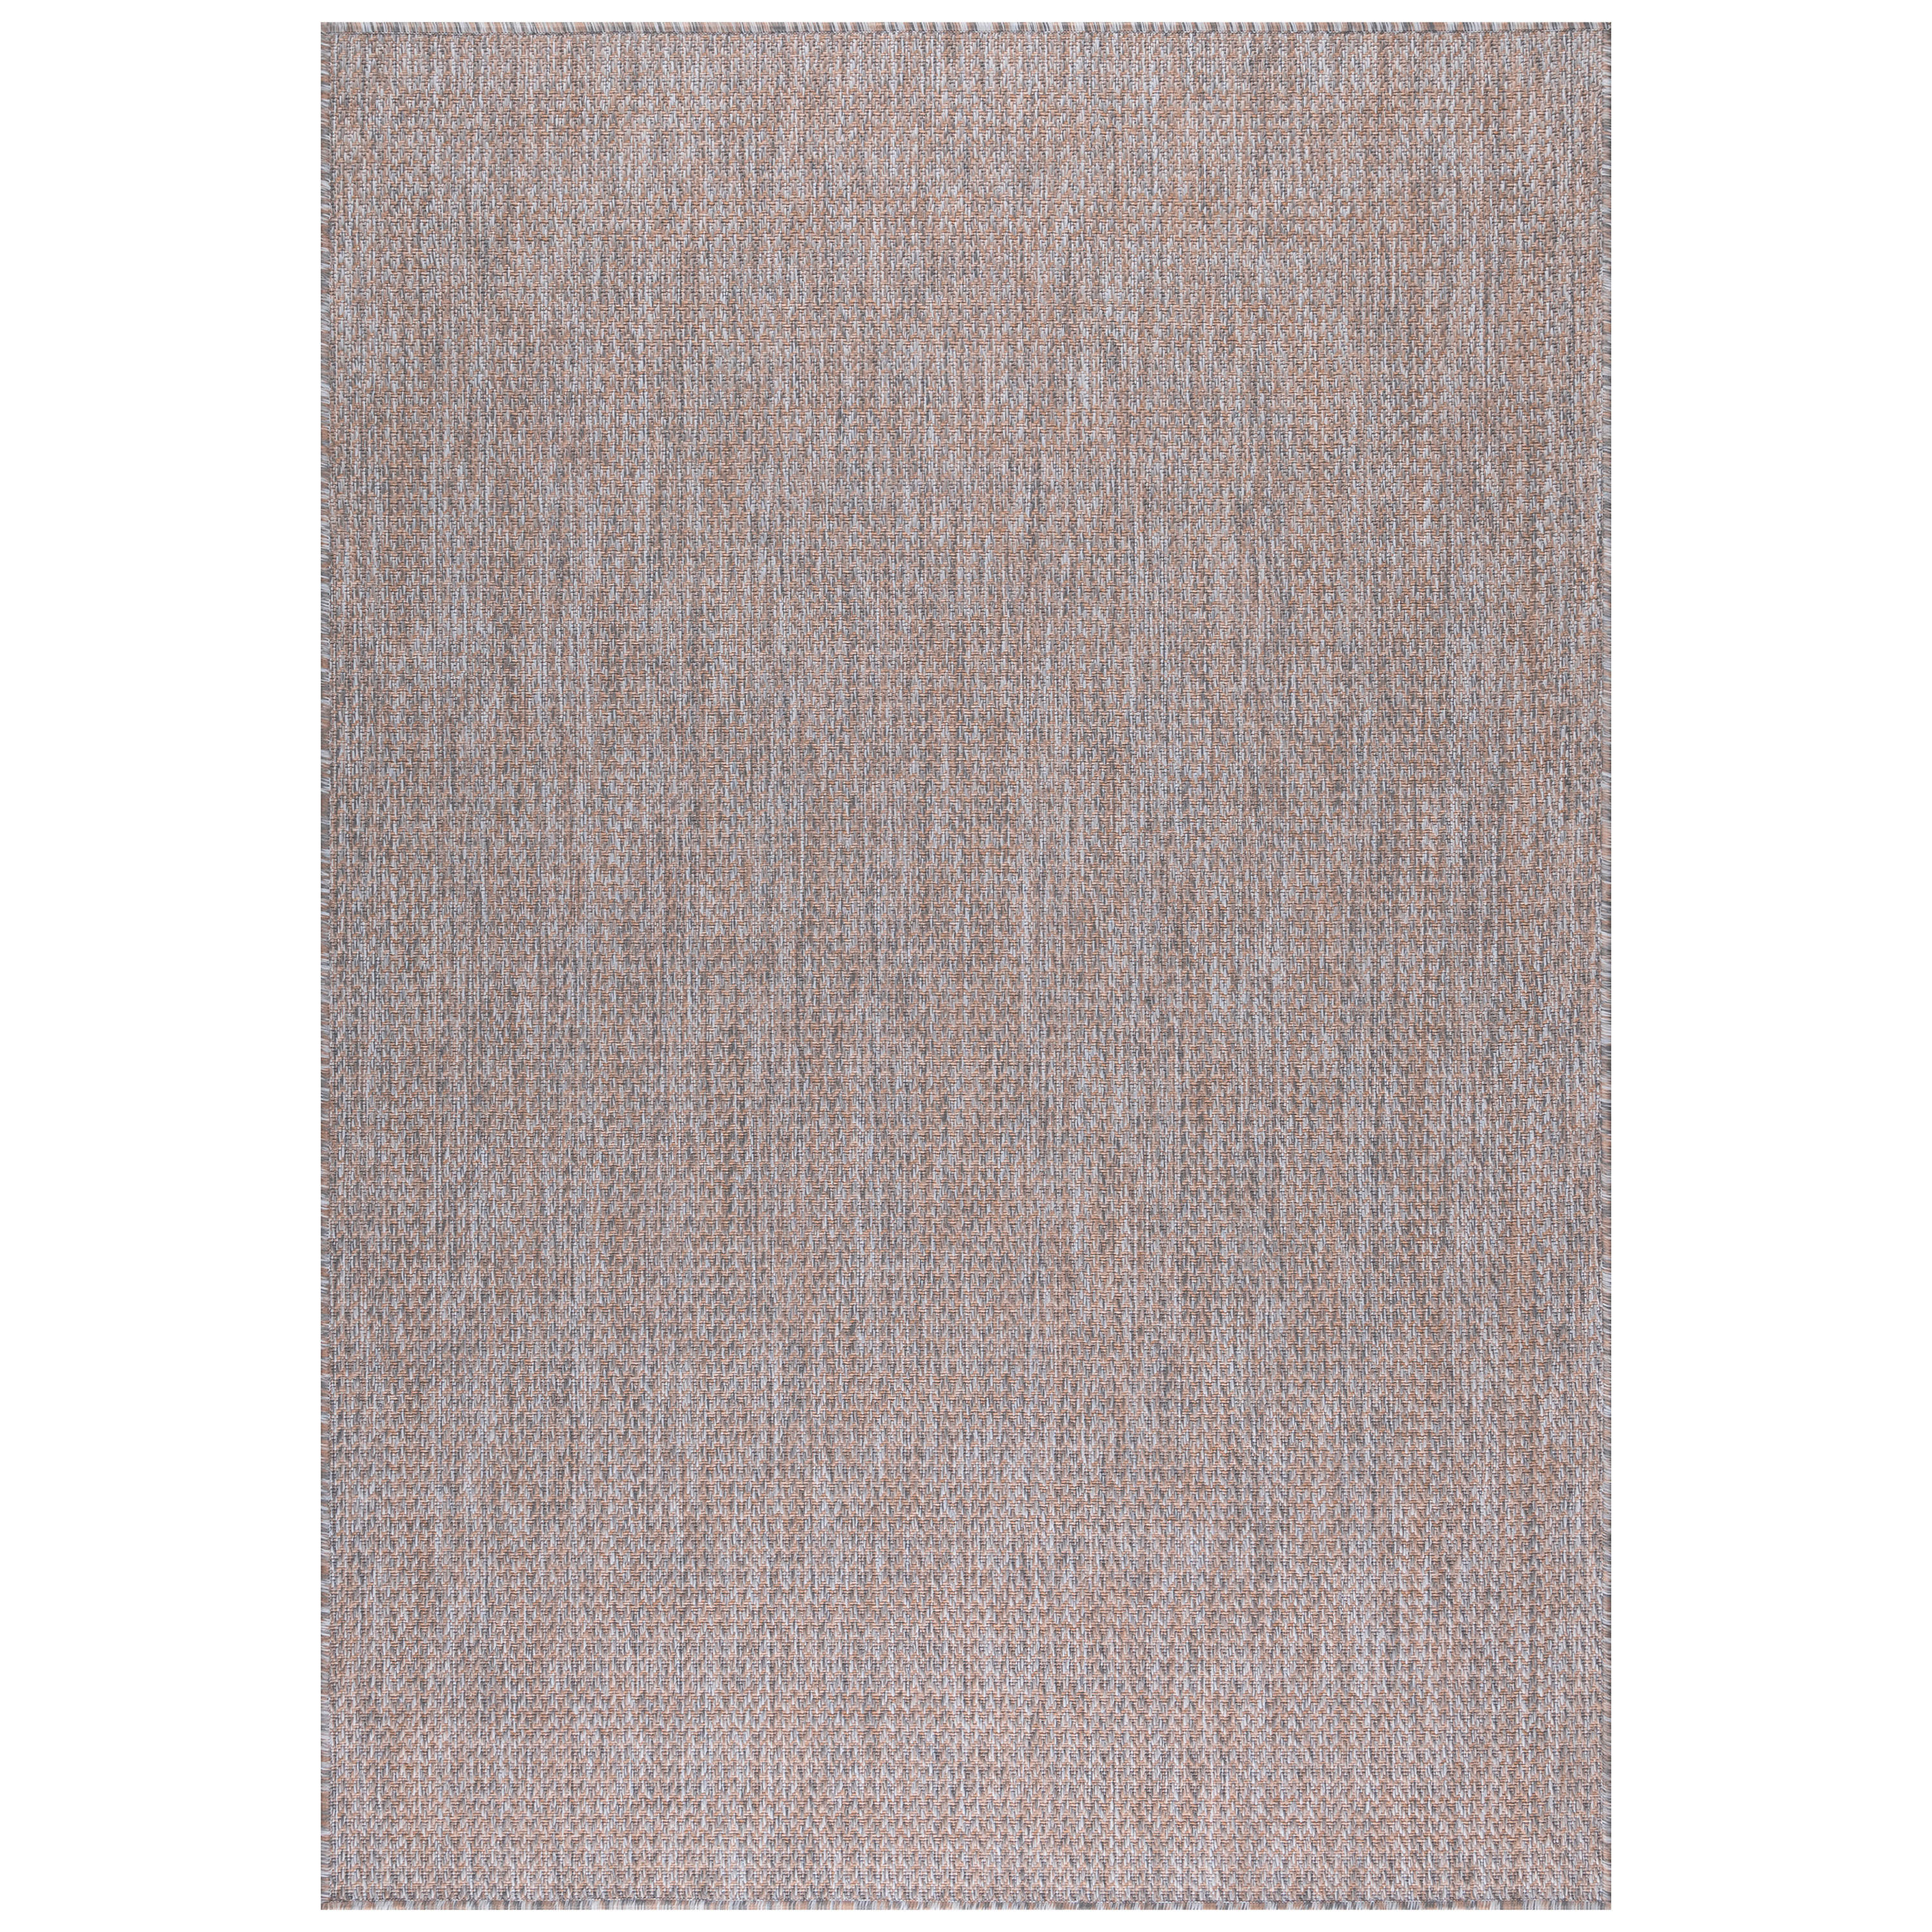 OUTDOORTEPPICH 80/250 cm Zagora  - Beige/Rosa, Basics, Textil (80/250cm) - Novel